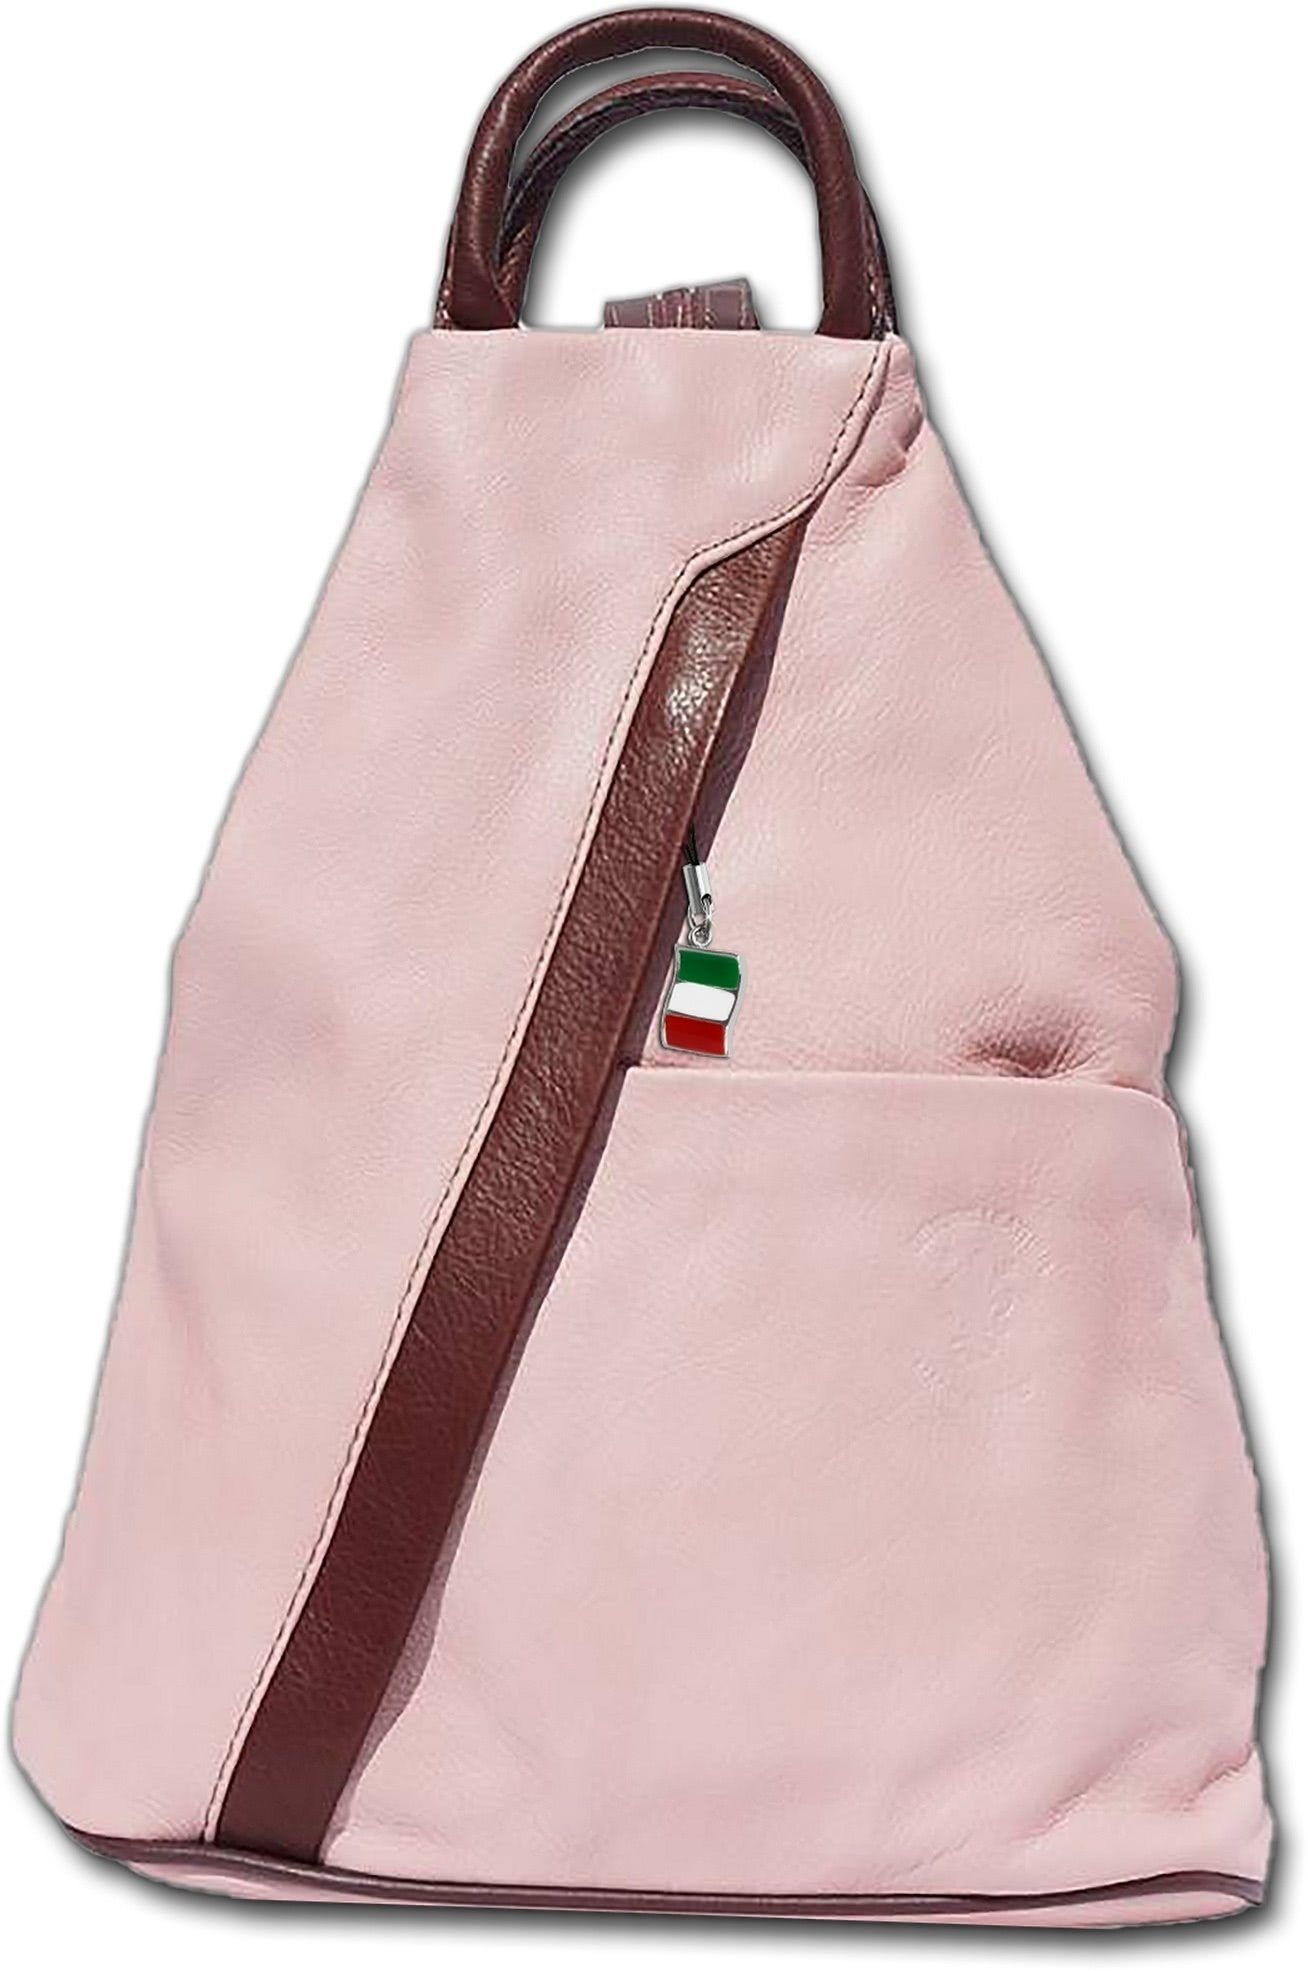 FLORENCE Cityrucksack Florence Damen Tasche Echtleder rosa (Schultertasche, Schultertasche), Damen Rucksack Echtleder rosa, braun, Made-In Italy